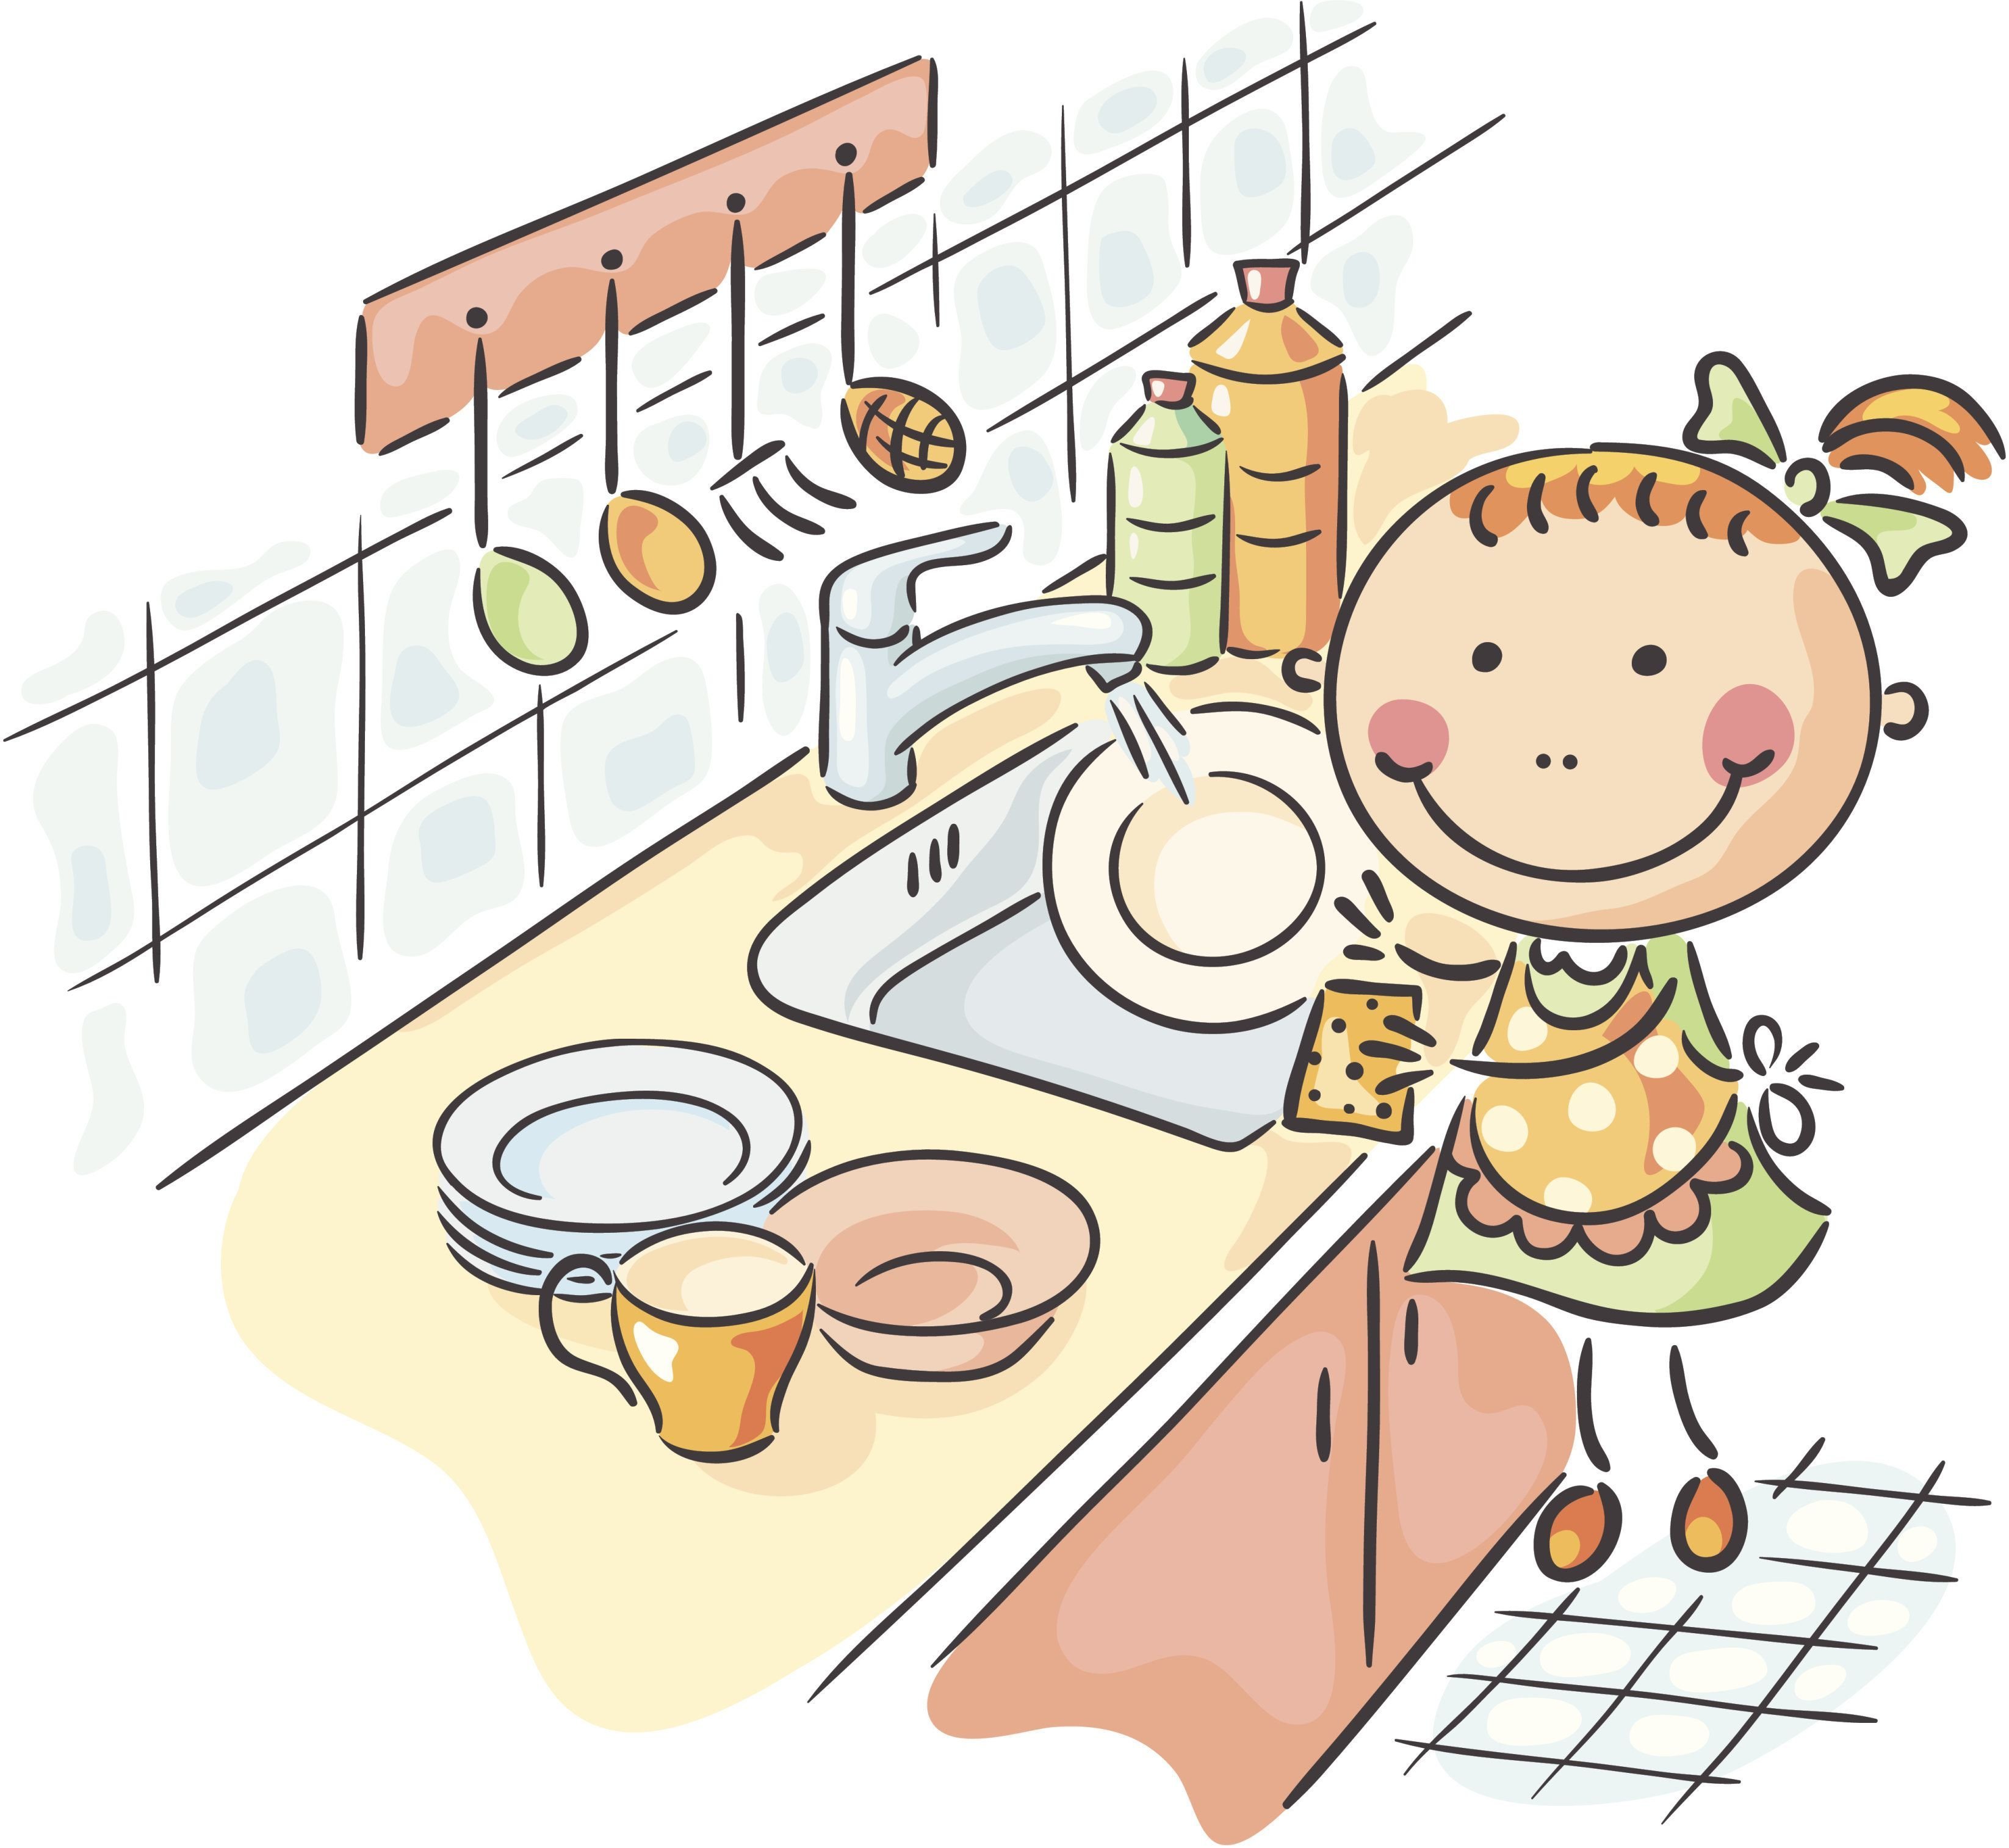 Helen wash the dishes for fifteen minutes. Мытье посуды для детей. Домашние дела иллюстрация. Кухня иллюстрация. Мытье посуды рисунок для детей.